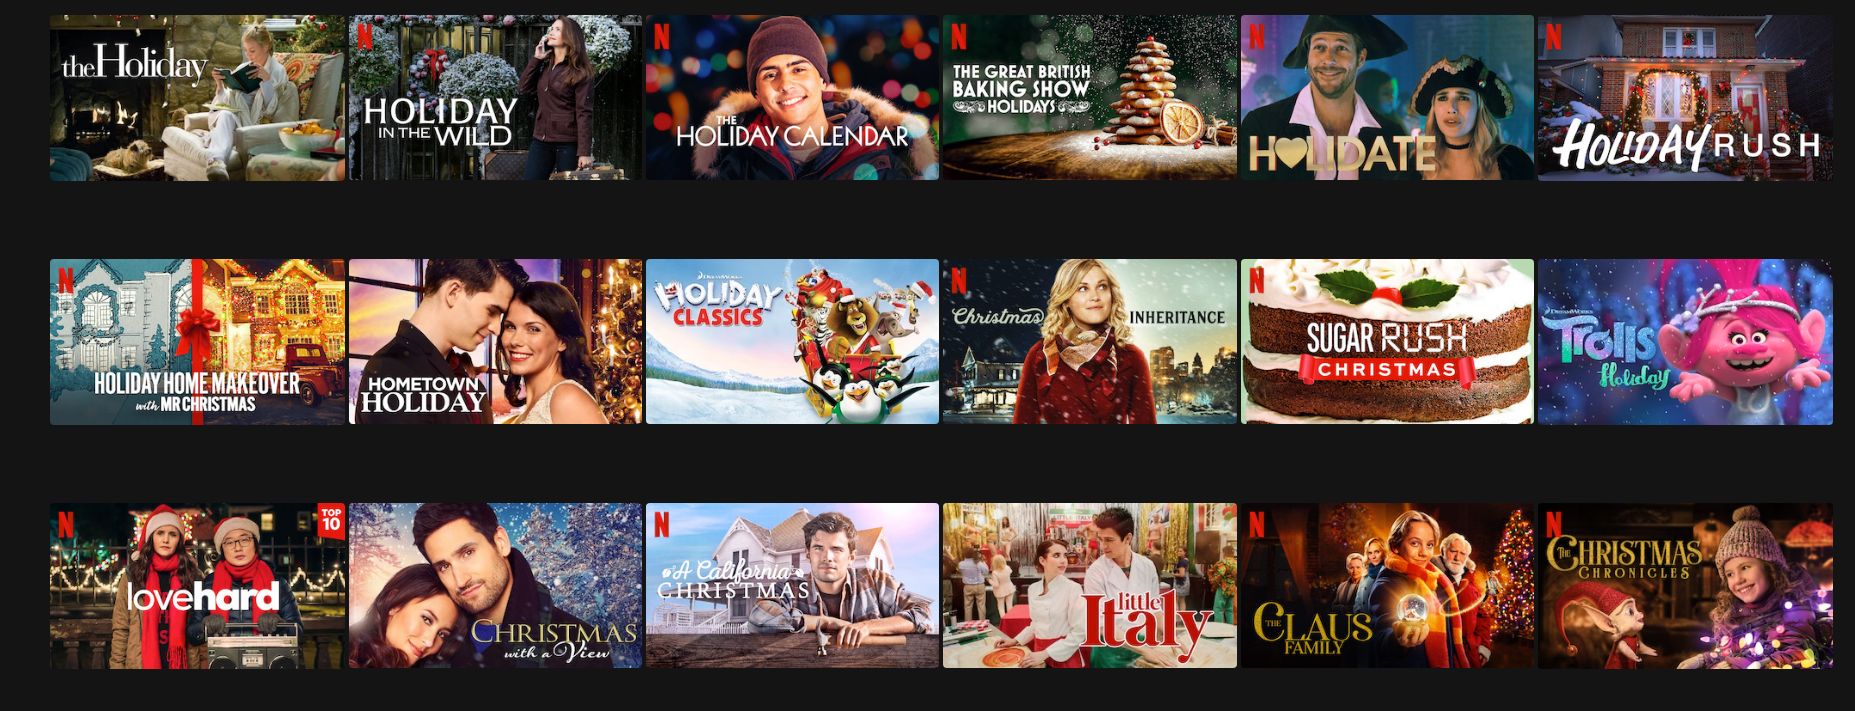 Os 10 melhores filmes de Natal na Netflix - RafaS GeeK